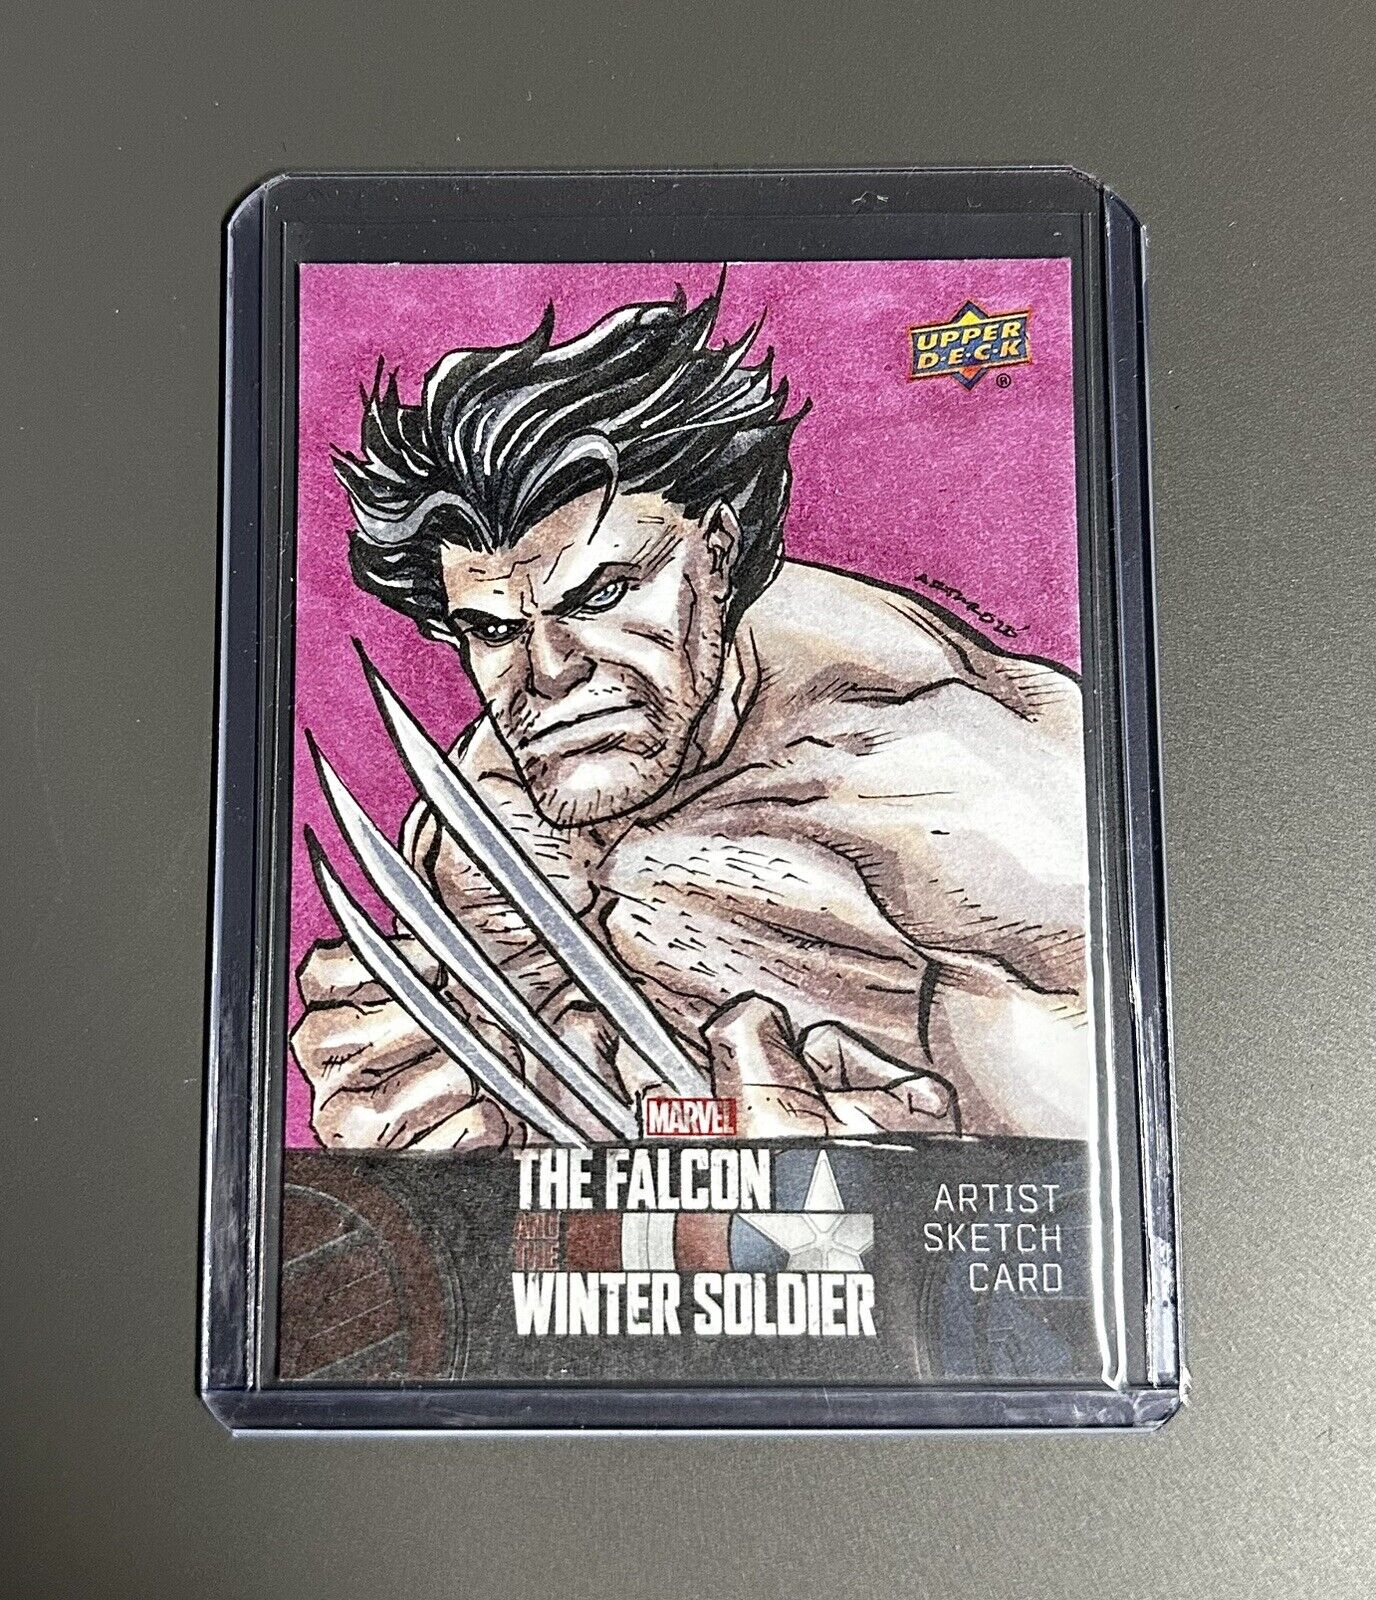 2022 UD Falcon & Winter Soldier AP Wolverine Sketch Card 1/1 by Arturo | Mint